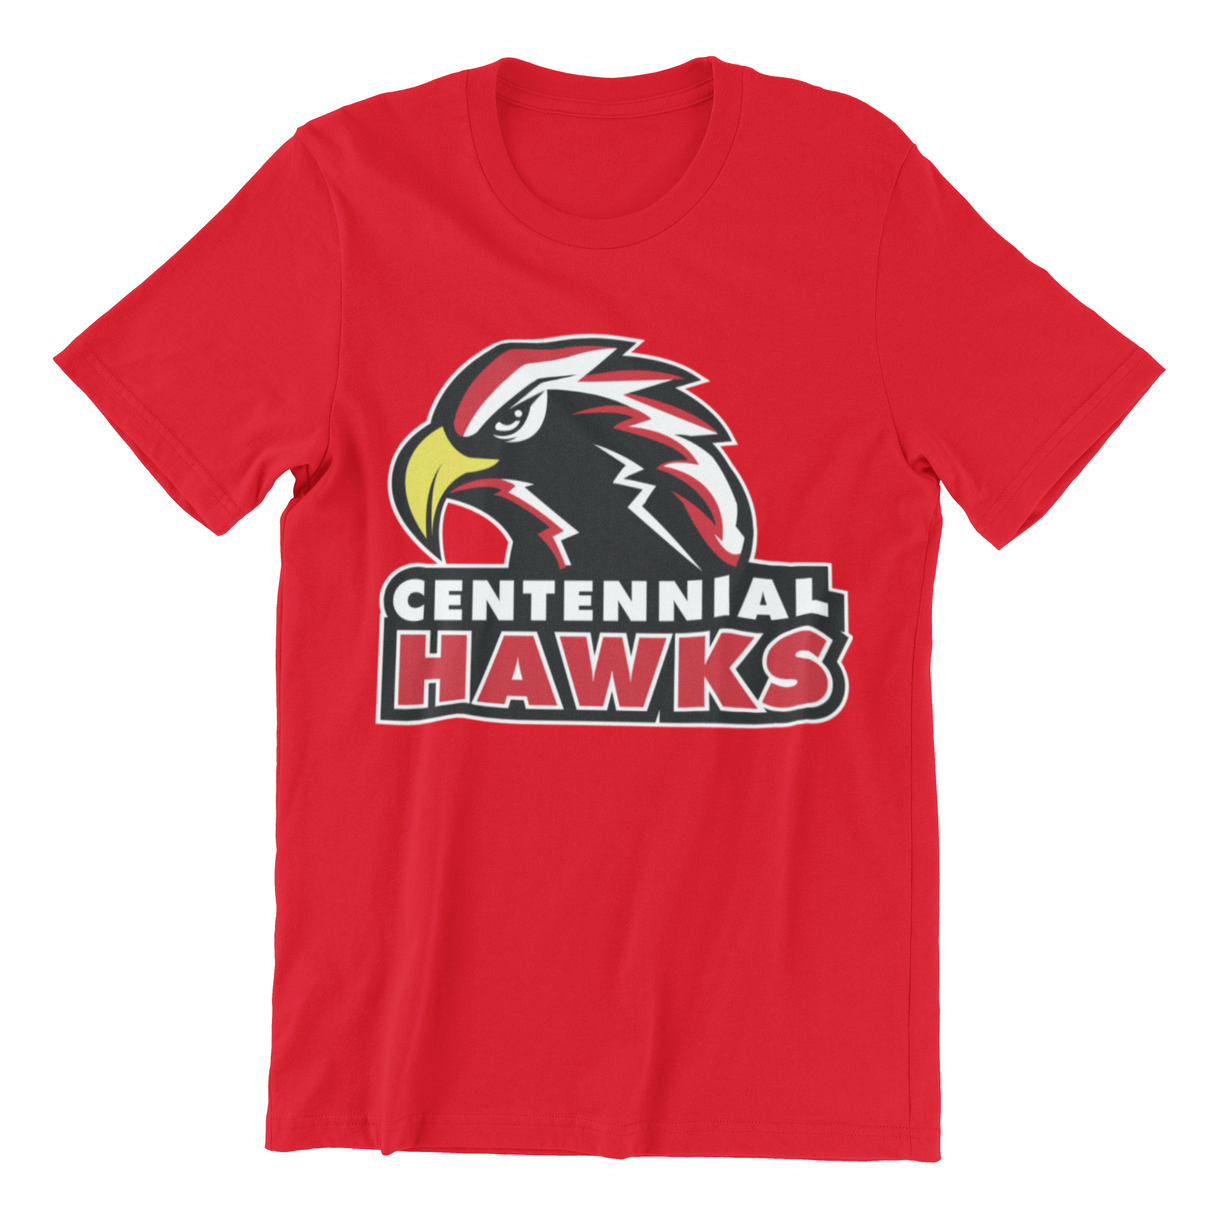 Centennial Hawks Youth Tee